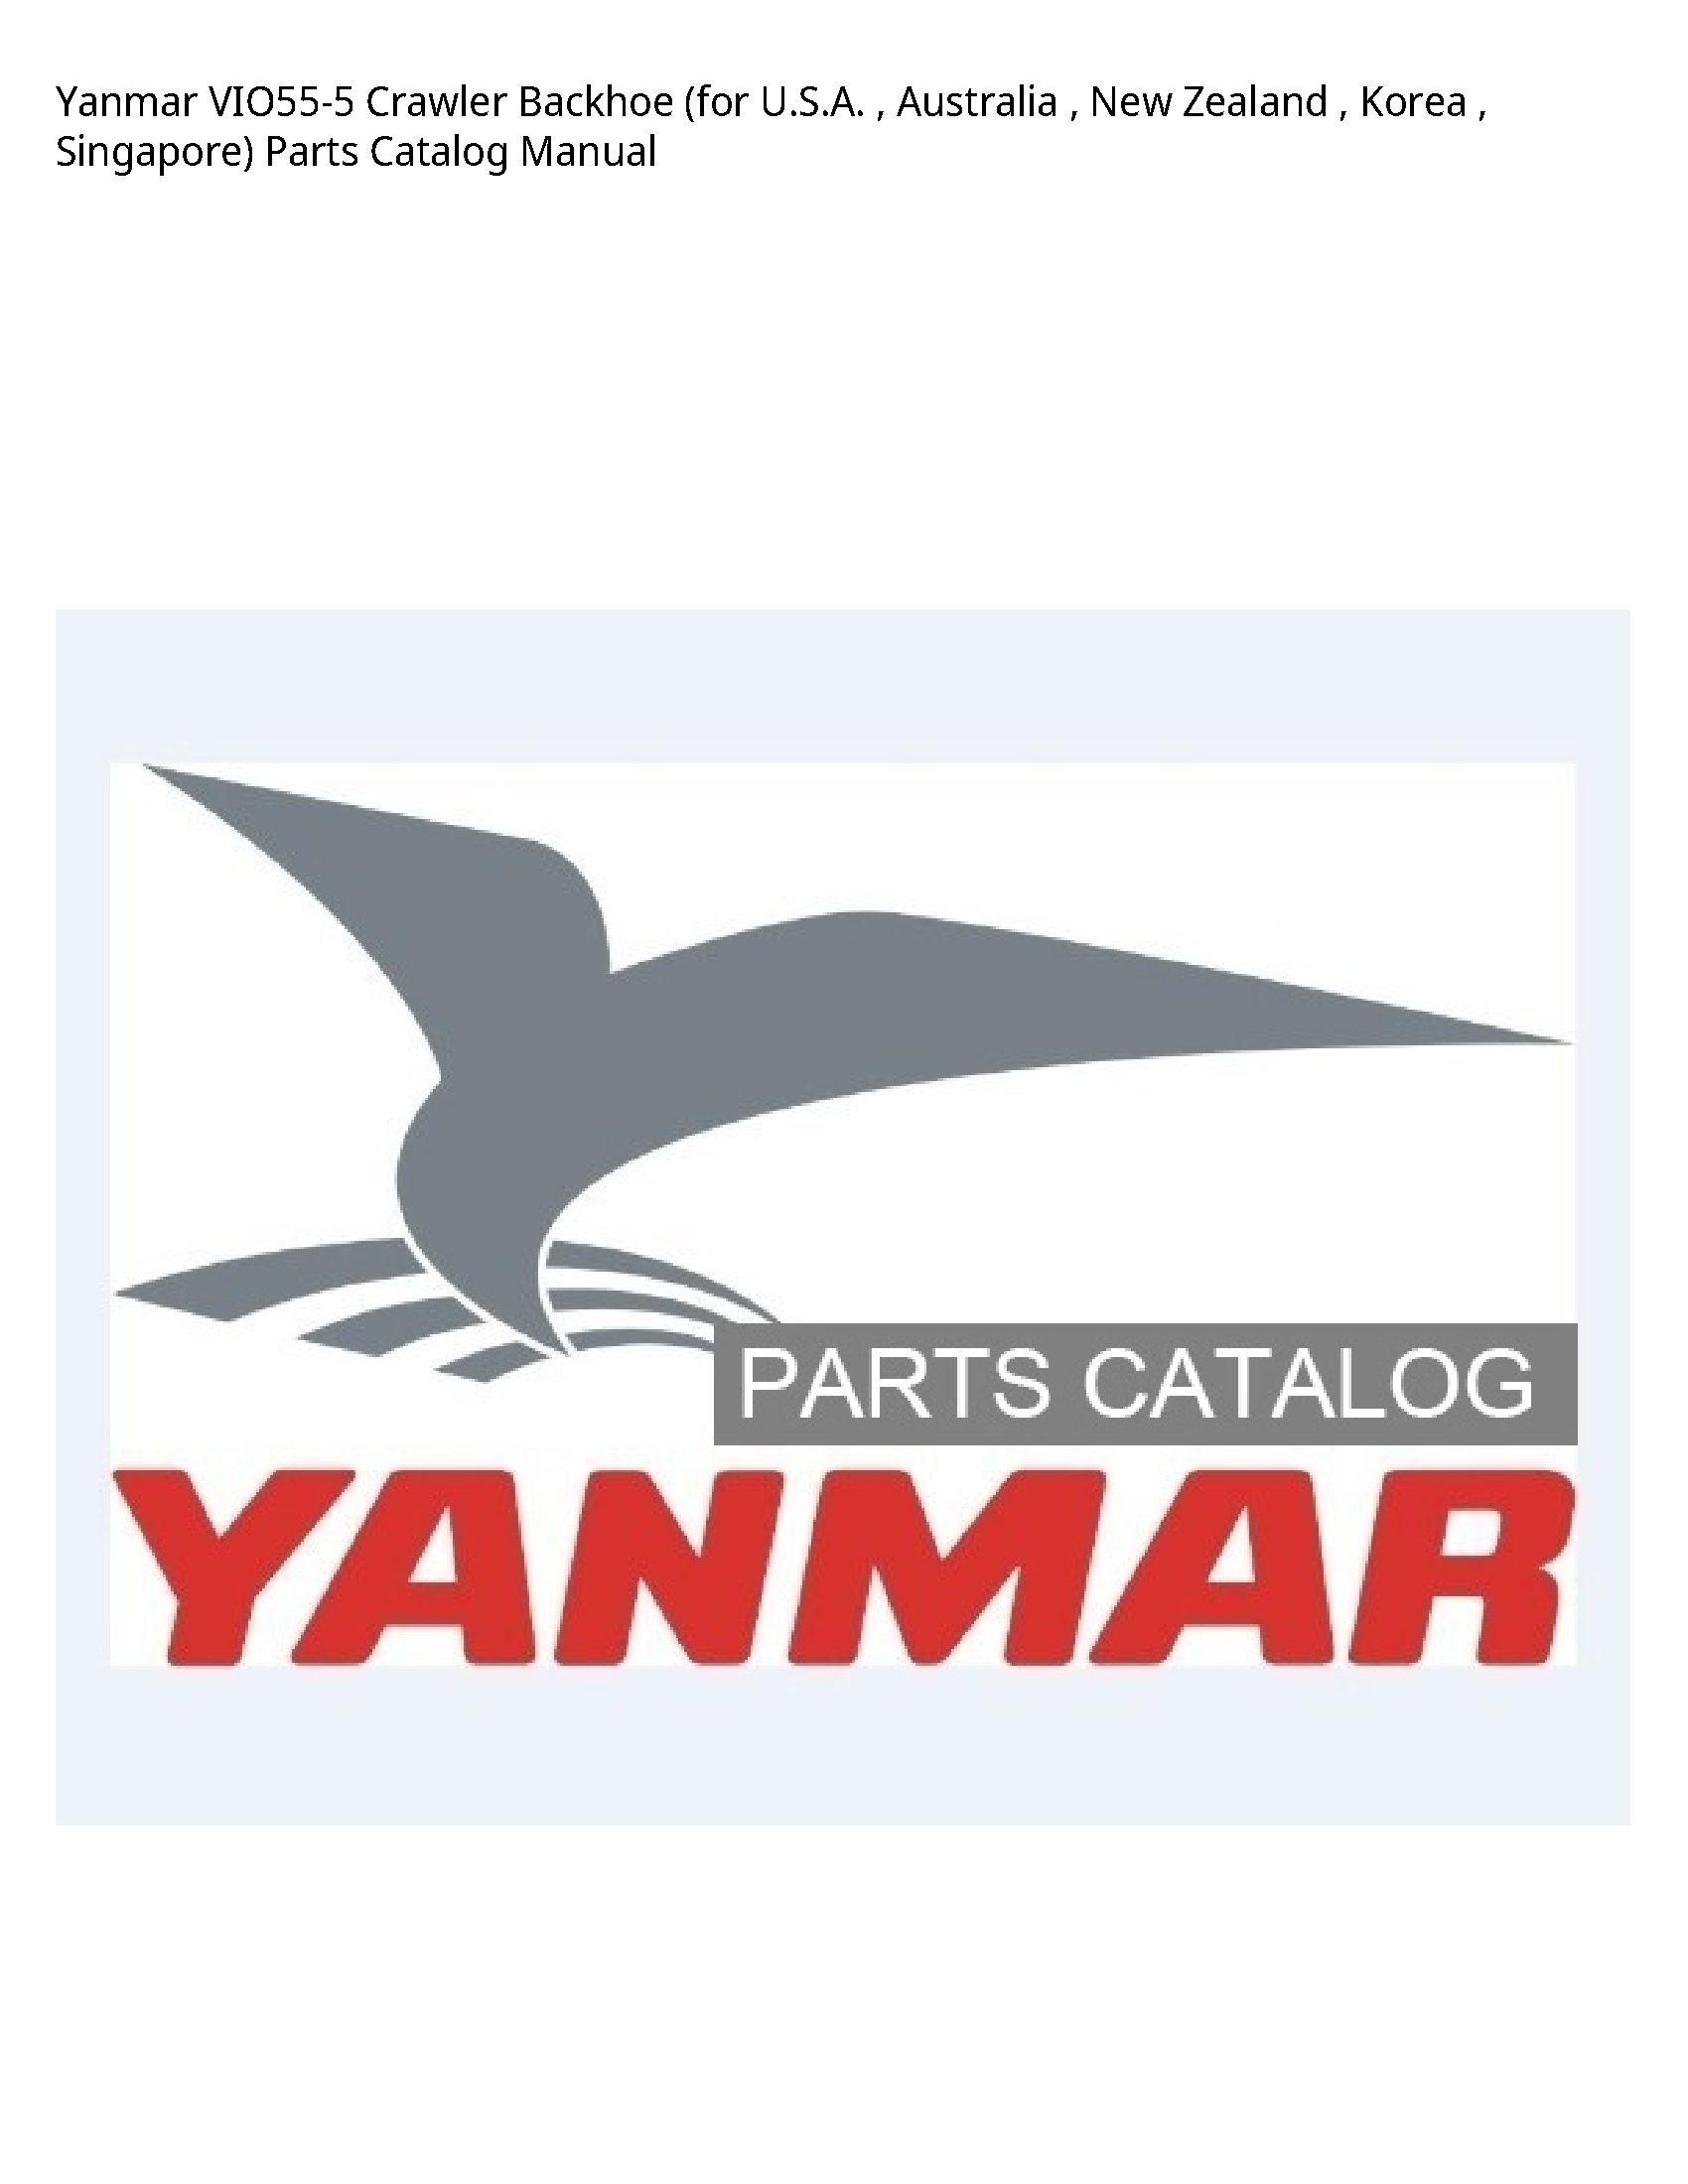 Yanmar VIO55-5 Crawler Backhoe (for U.S.A. Australia New Zealand Korea Singapore) Parts Catalog manual